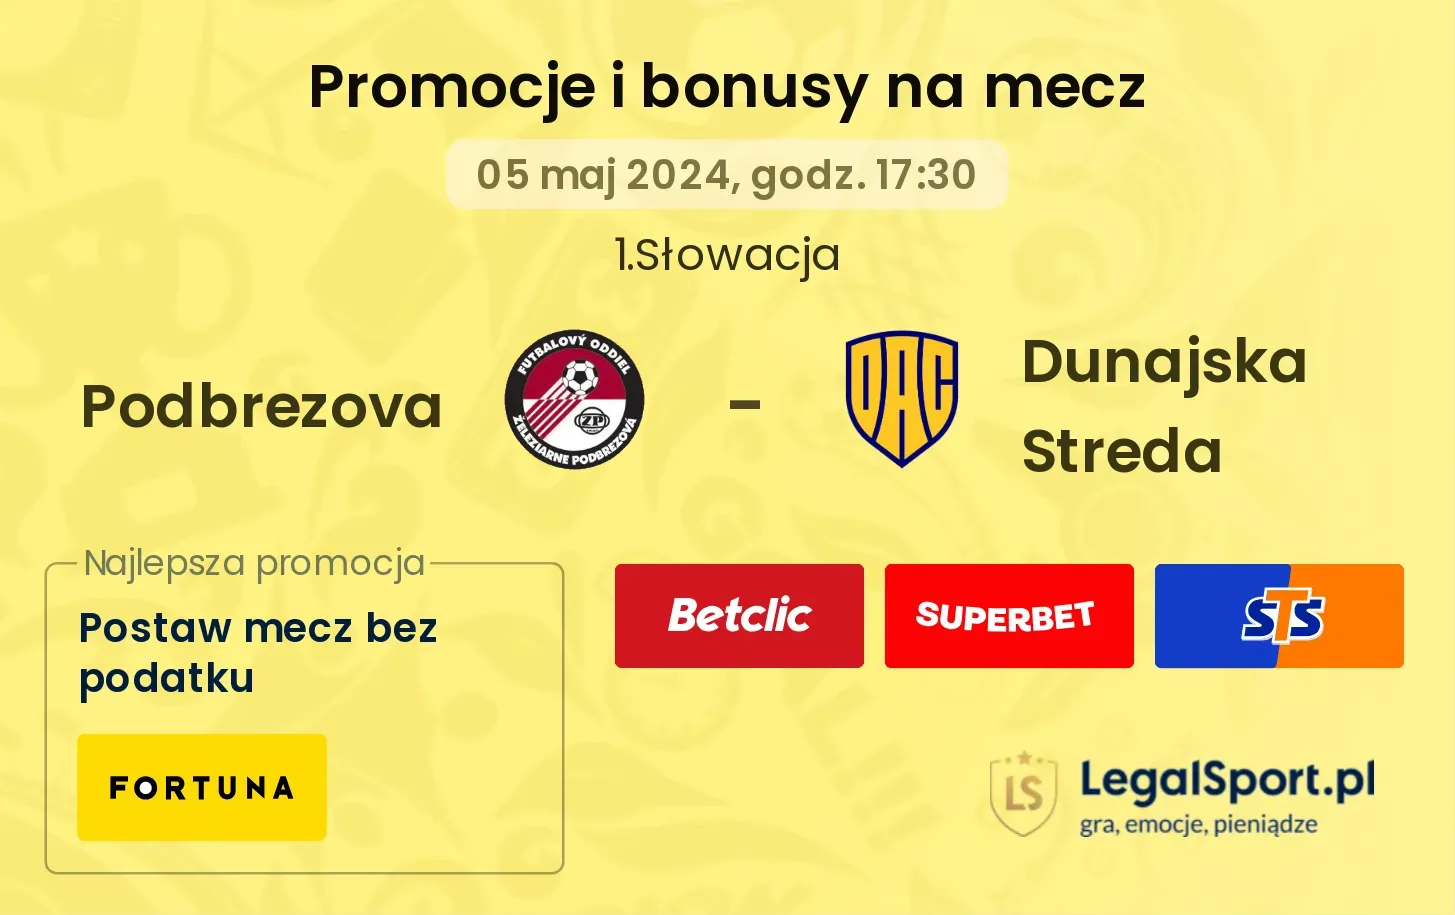 Podbrezova - Dunajska Streda  promocje bonusy na mecz